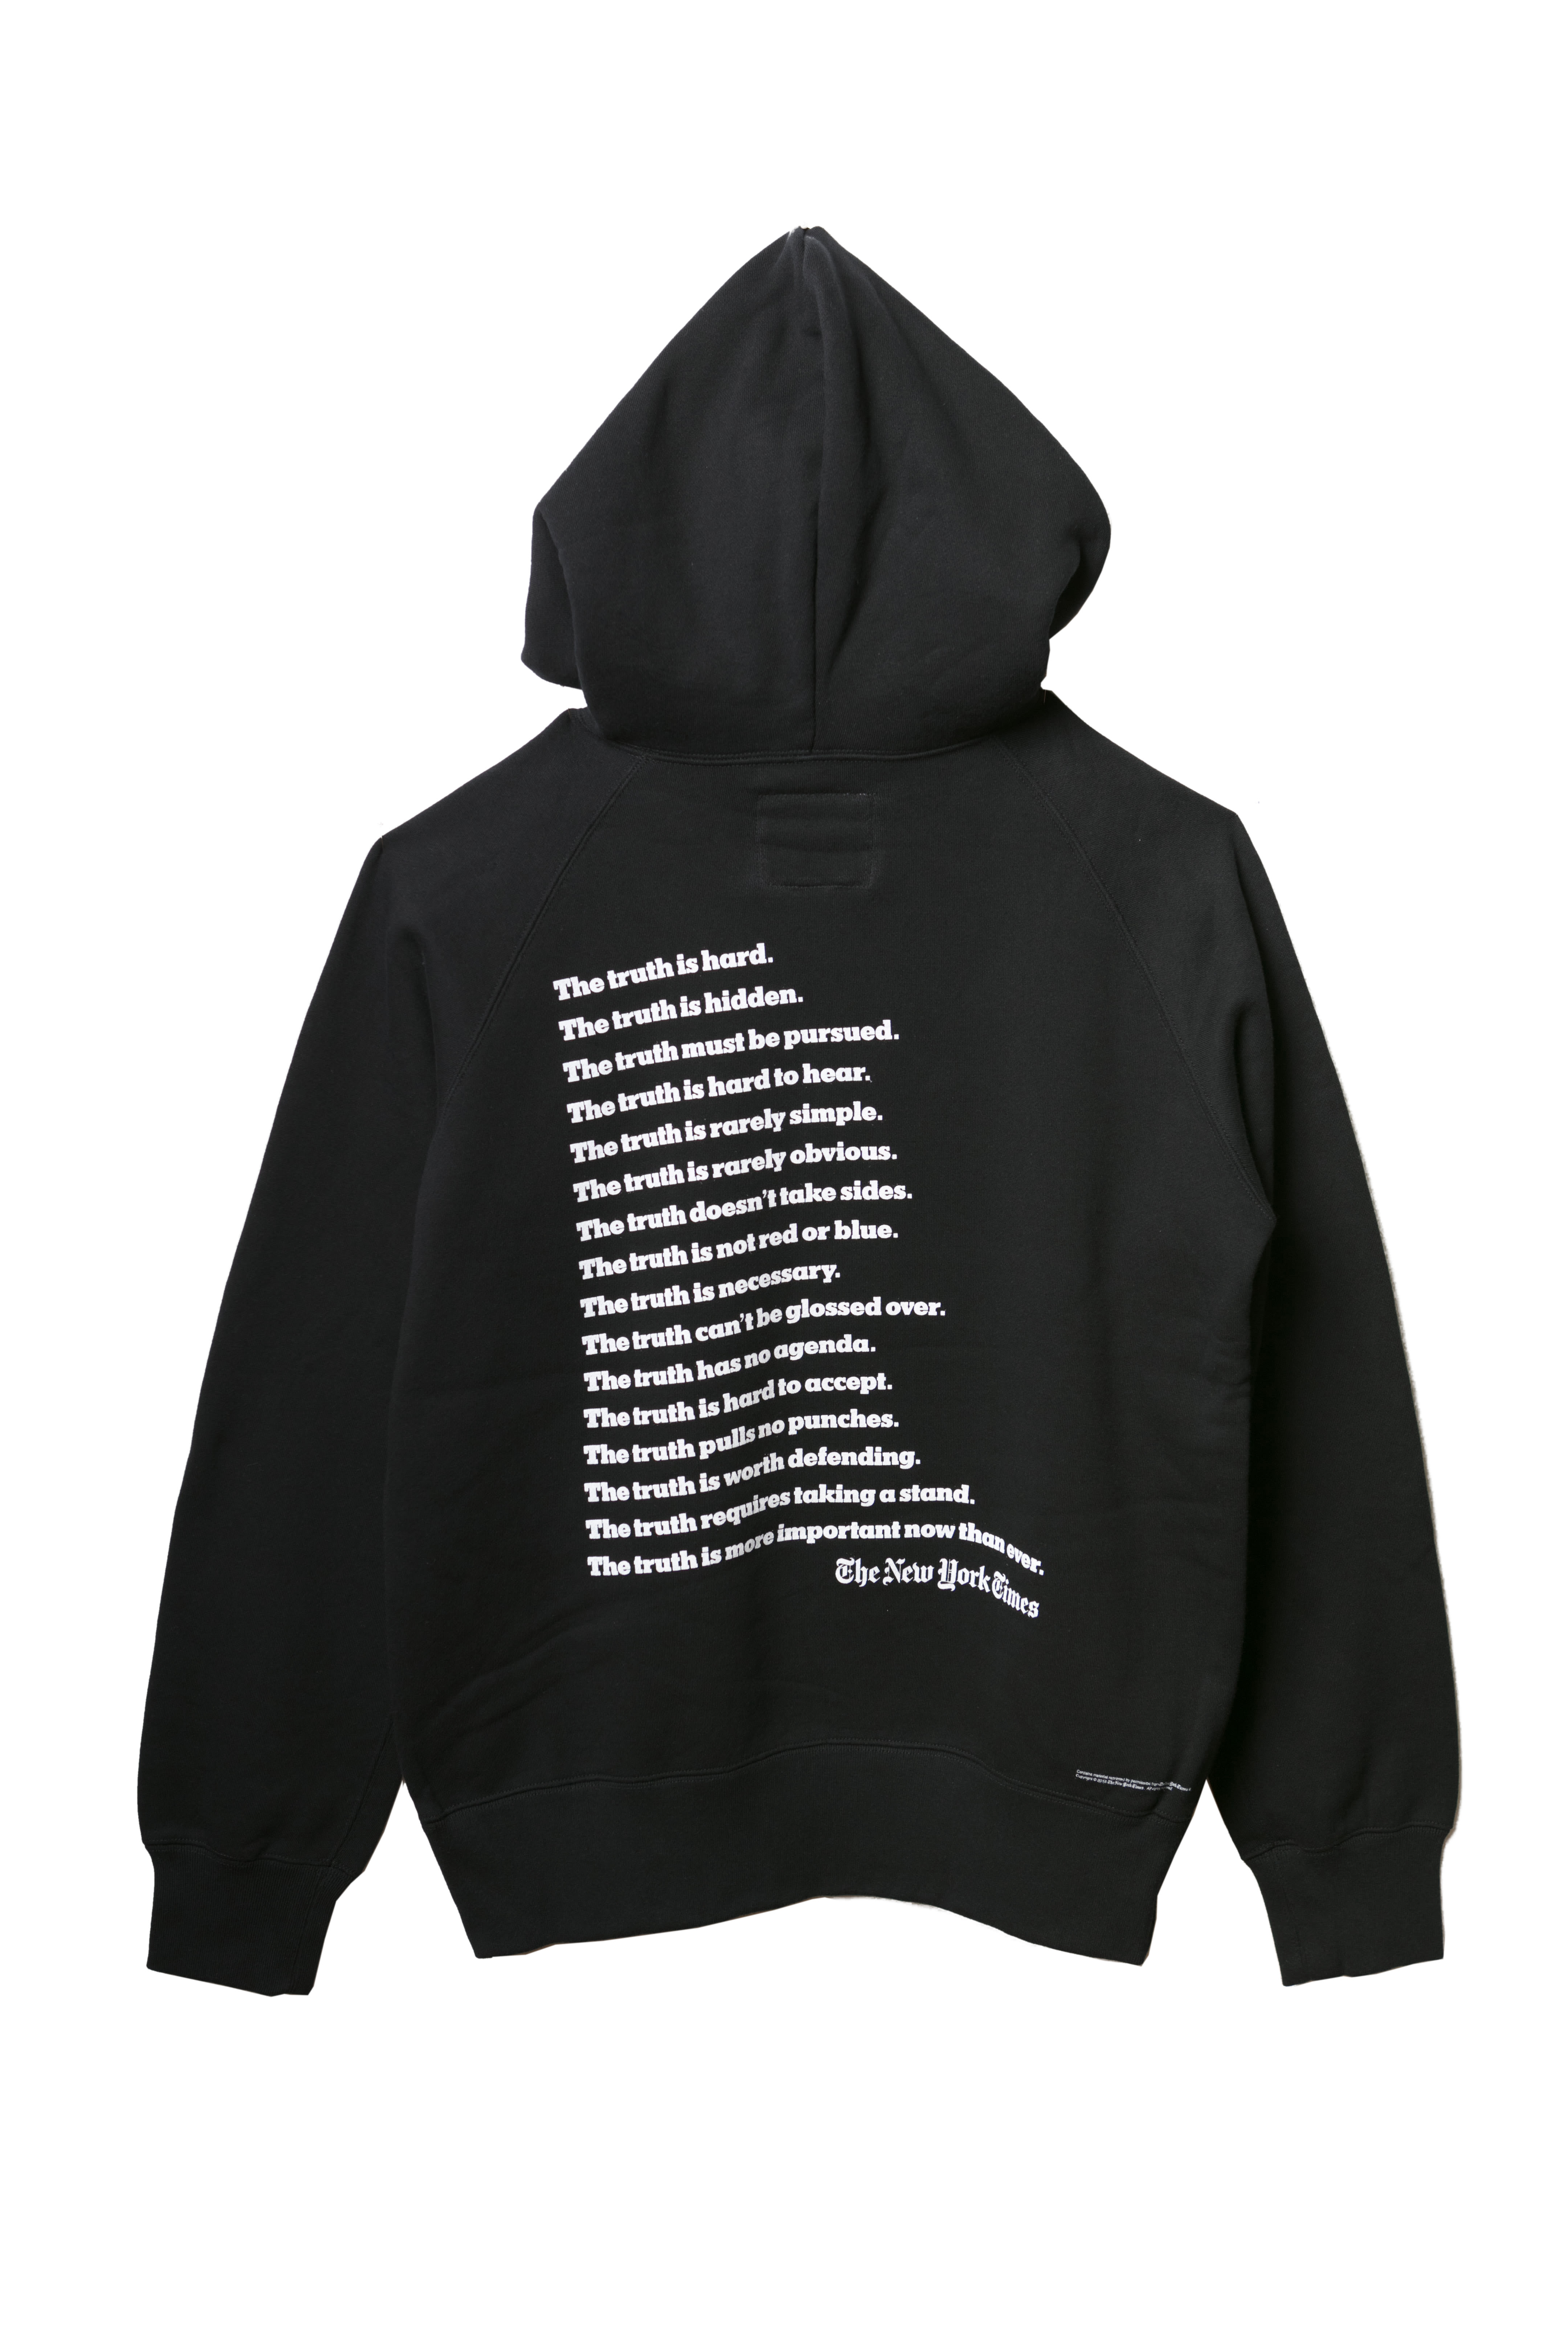 sacai-fw-2018-nyt-black-back-hoodie